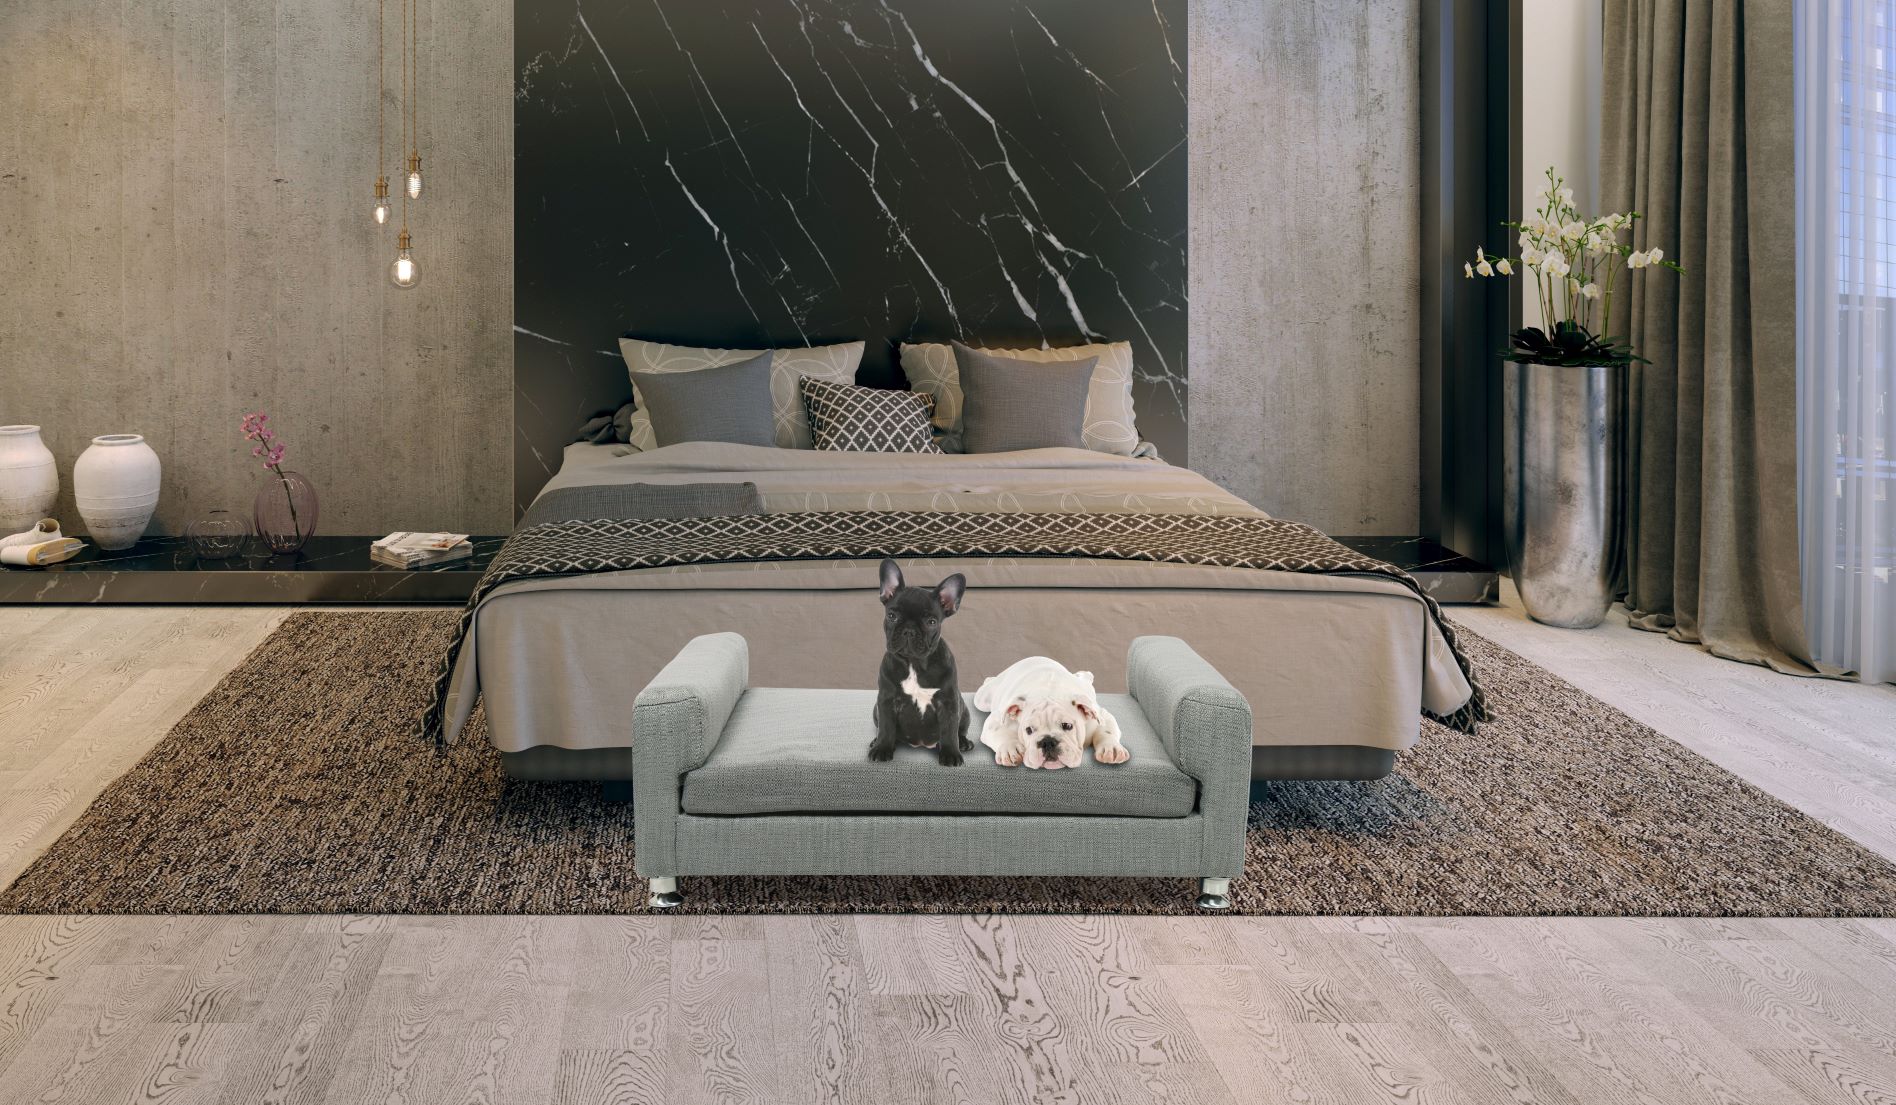 Cucciolo Benchorthopedic Dog Bed From Urban Modern